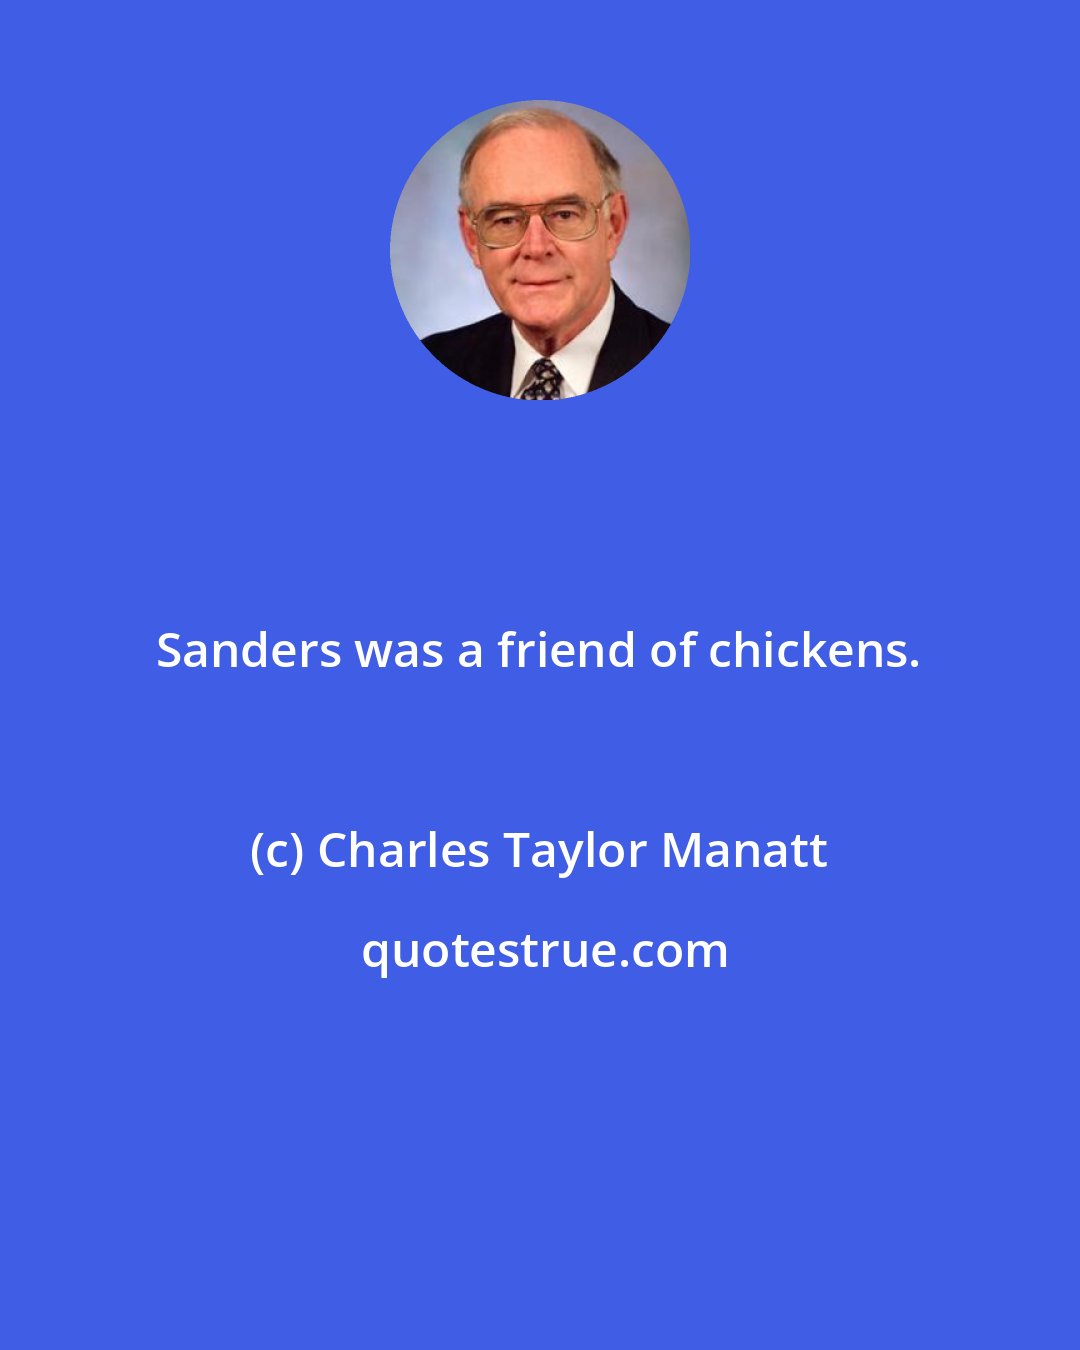 Charles Taylor Manatt: Sanders was a friend of chickens.